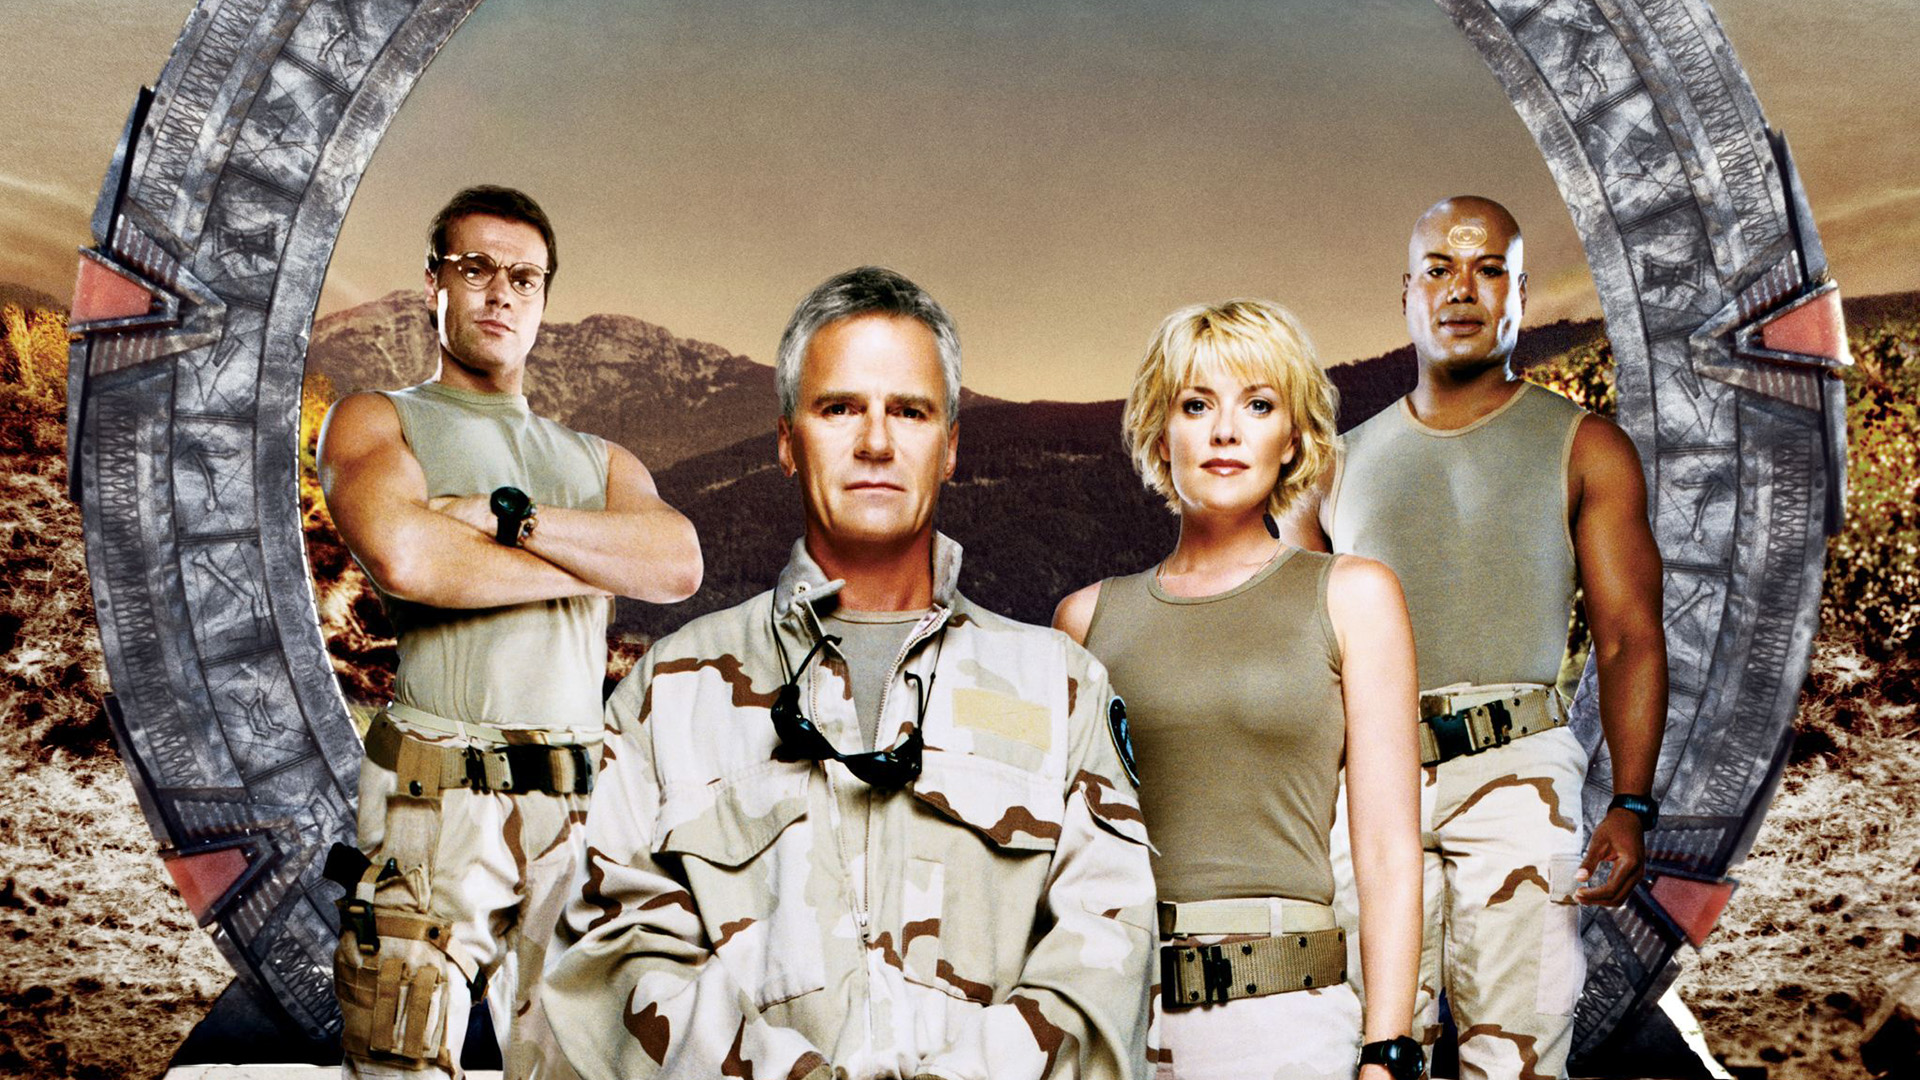 Stargate SG-1 HD Wallpaper